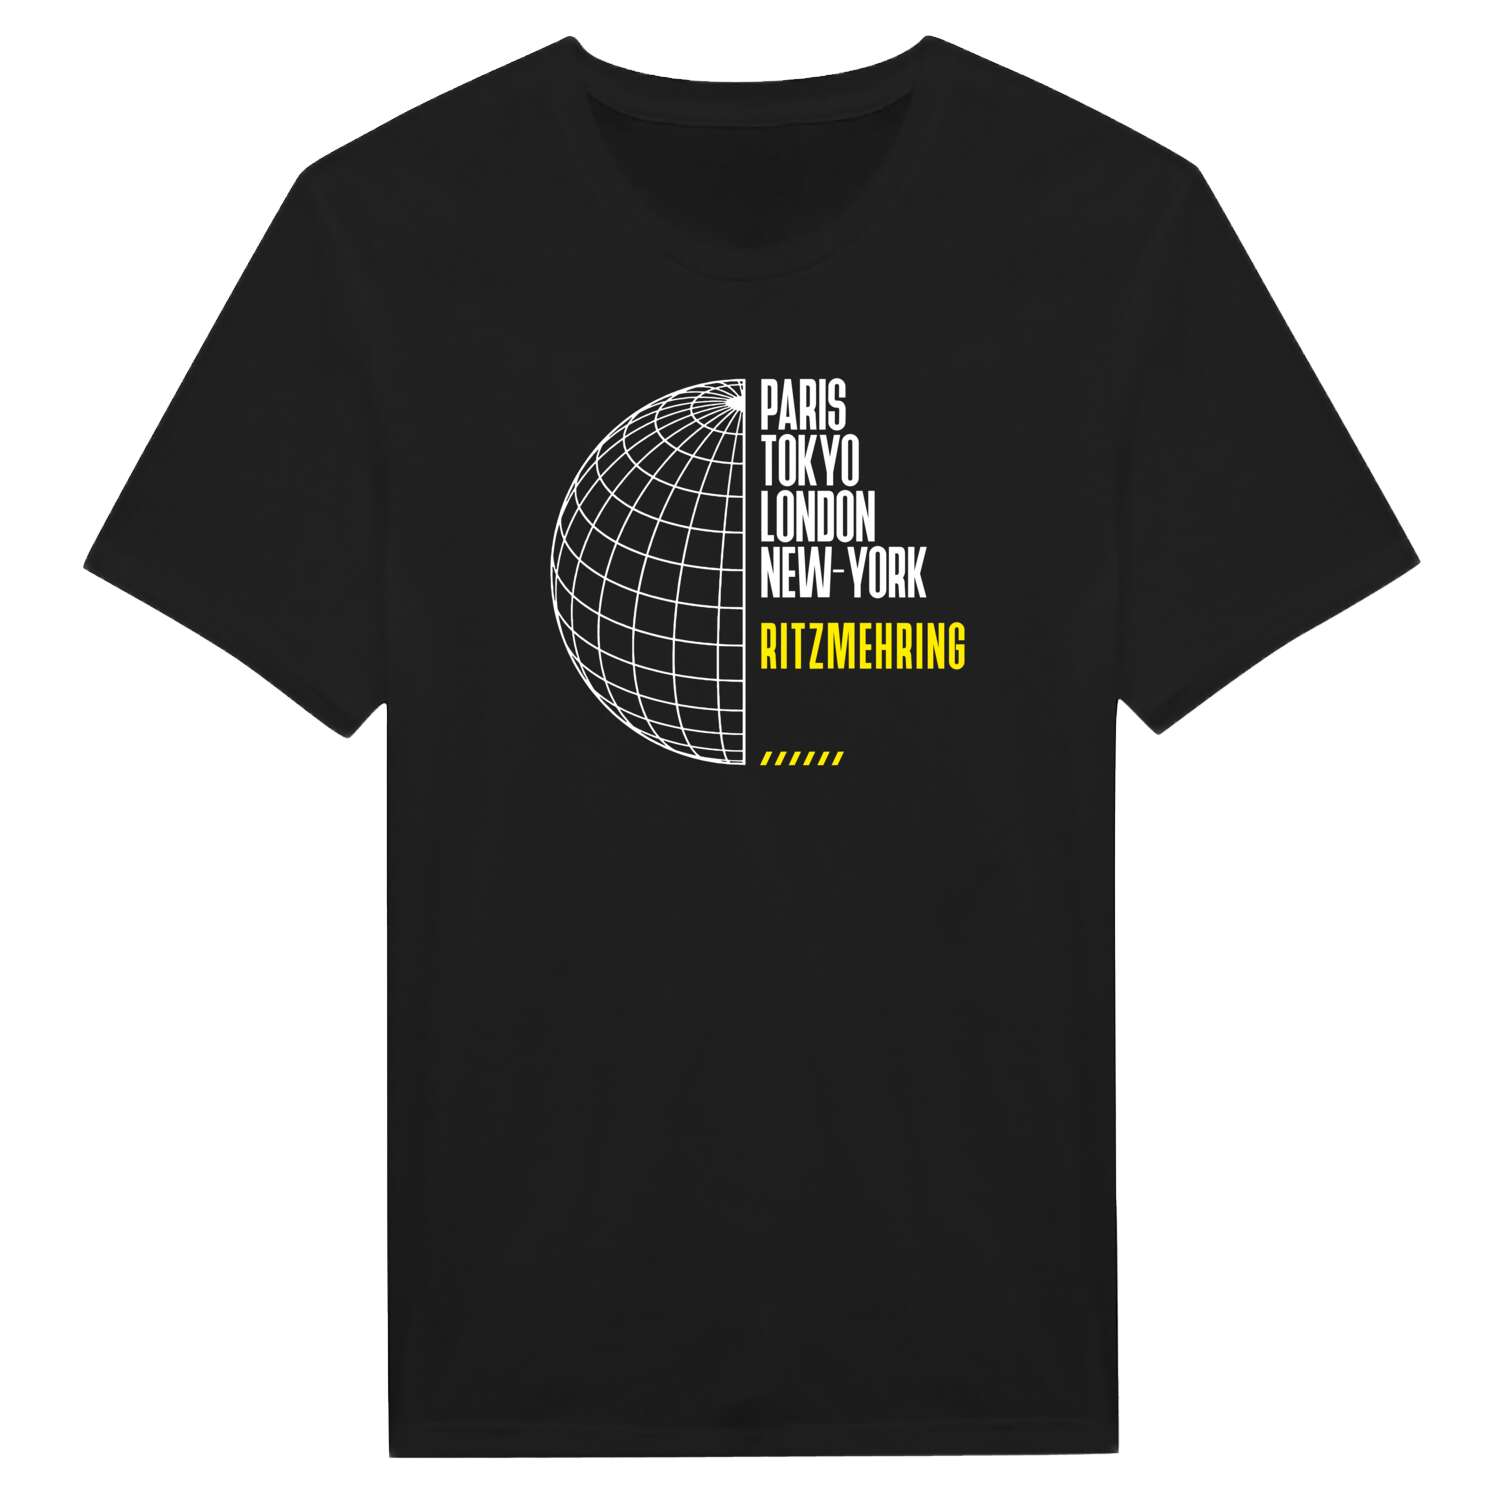 Ritzmehring T-Shirt »Paris Tokyo London«